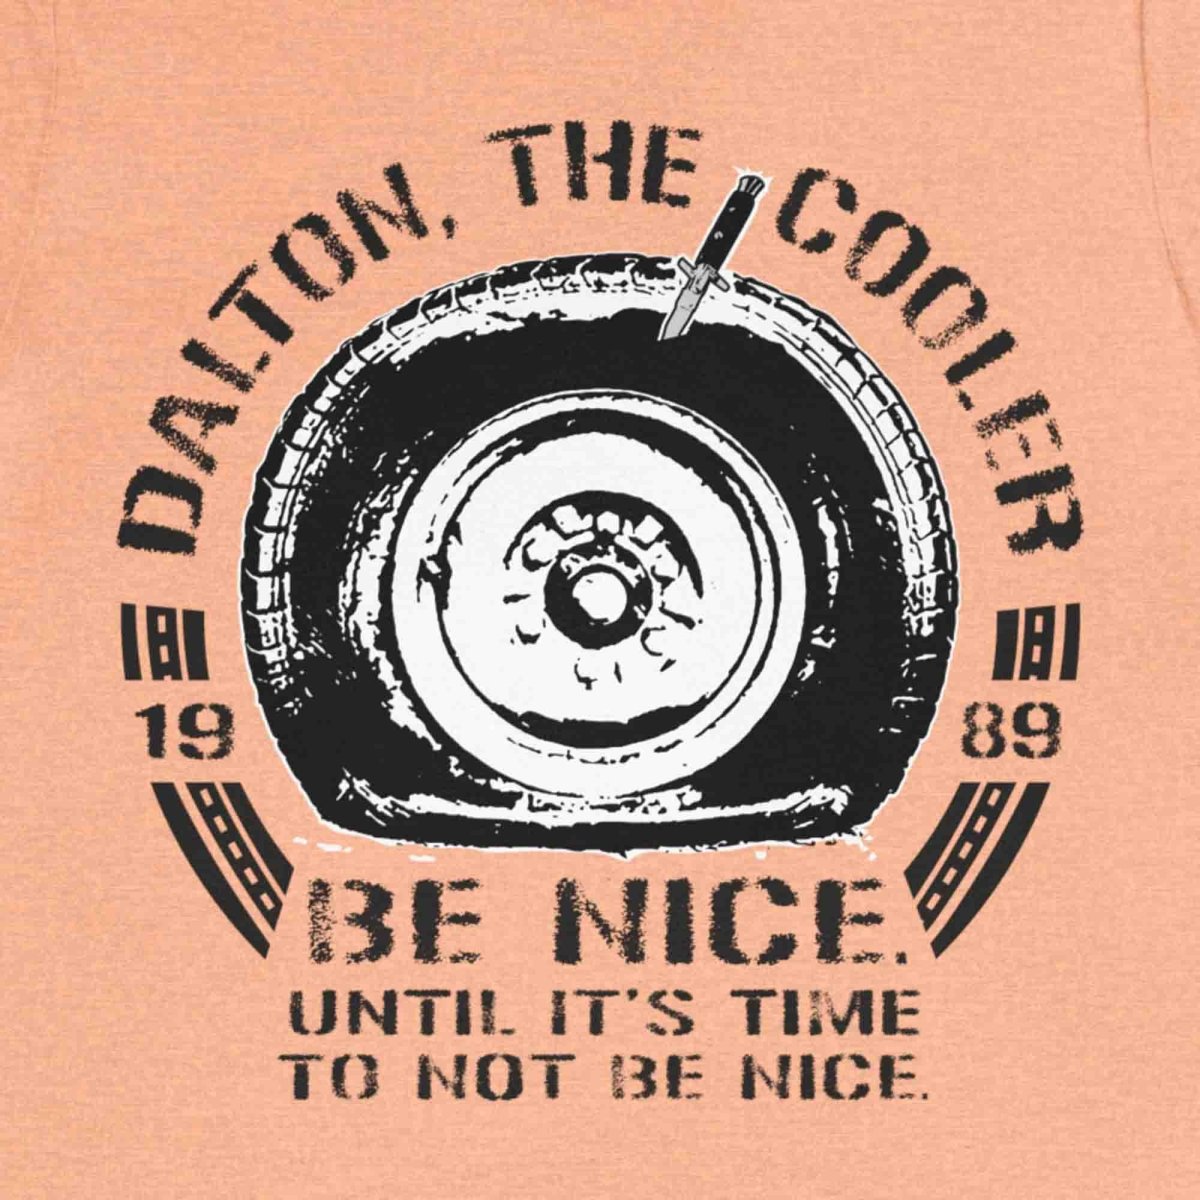 Dalton The Cooler Premium T-Shirt, Not Be Nice, Knifed Tire